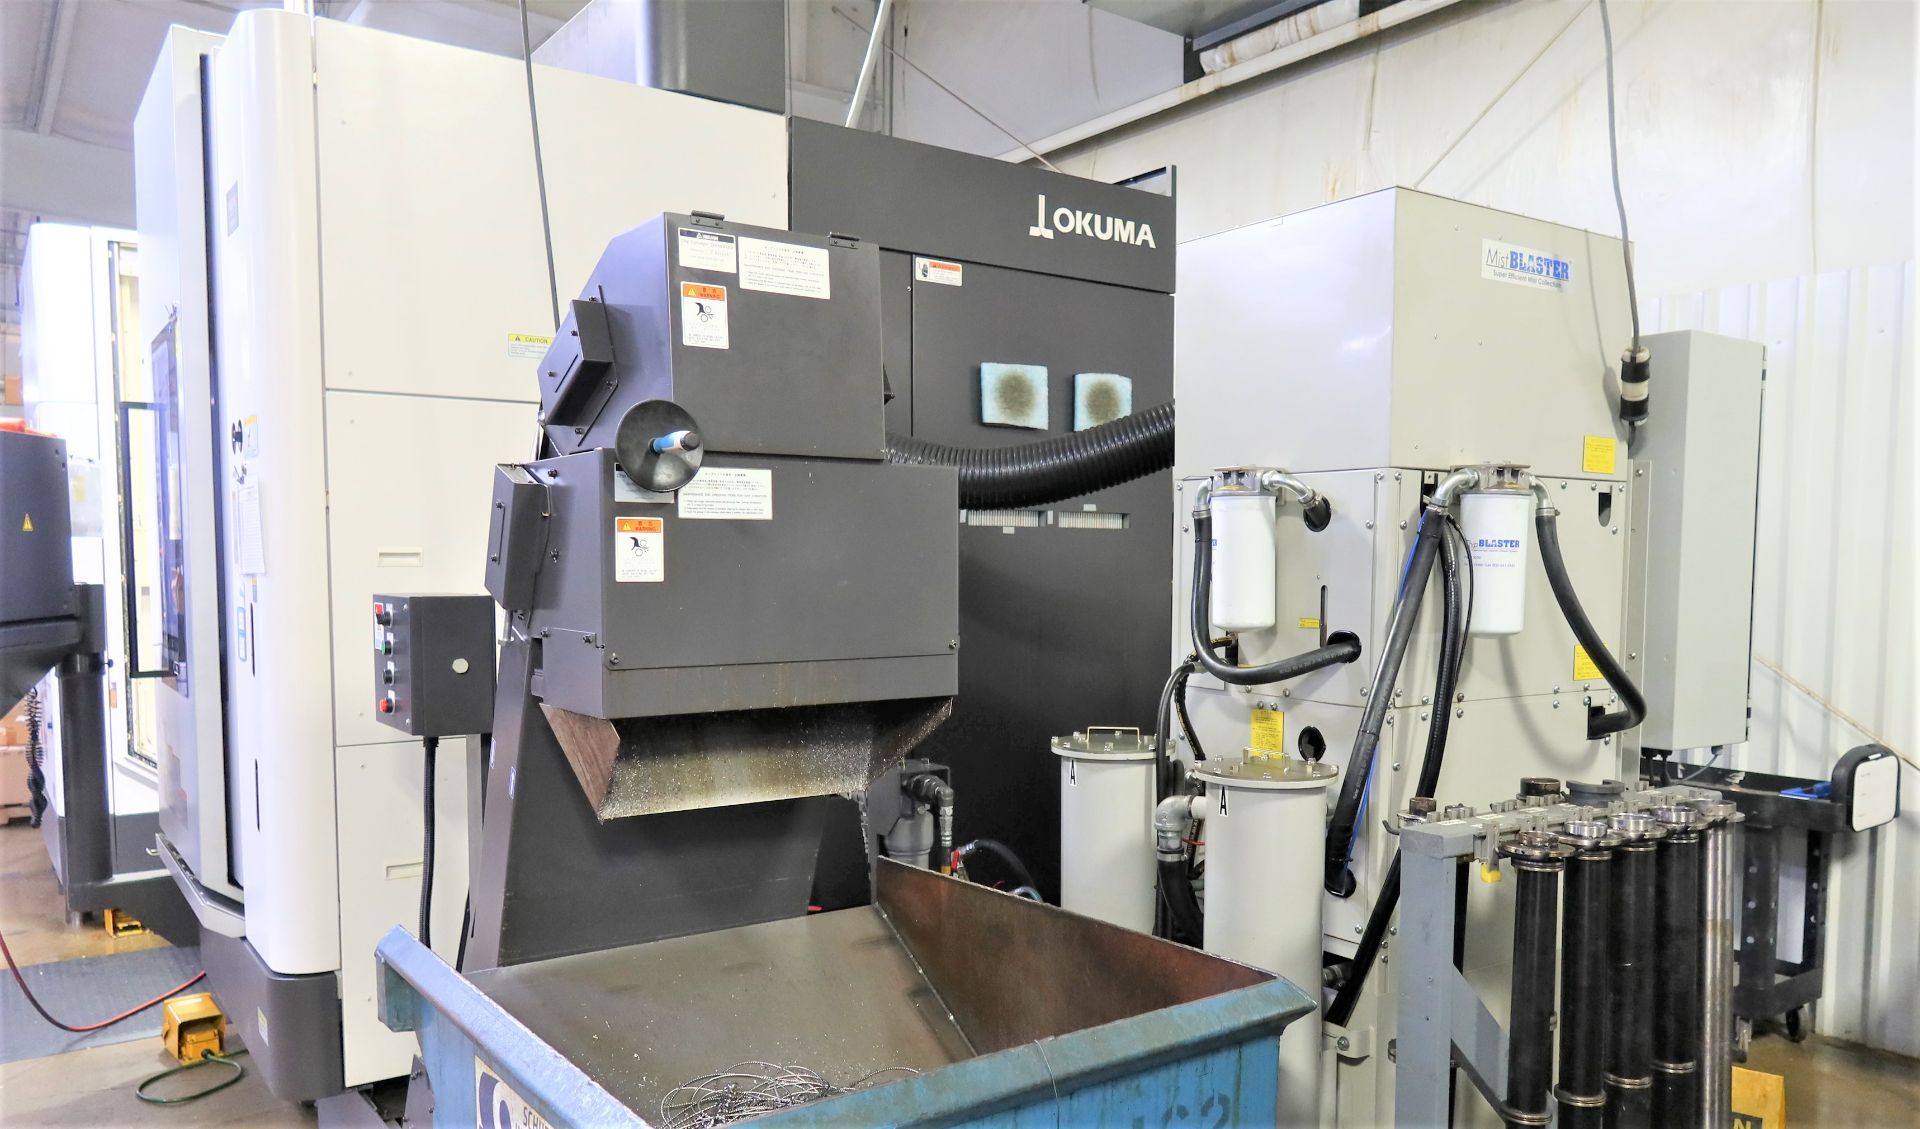 Okuma Multus U3000 5-Axis CNC Mill Lathe, New 2015 - Image 8 of 15